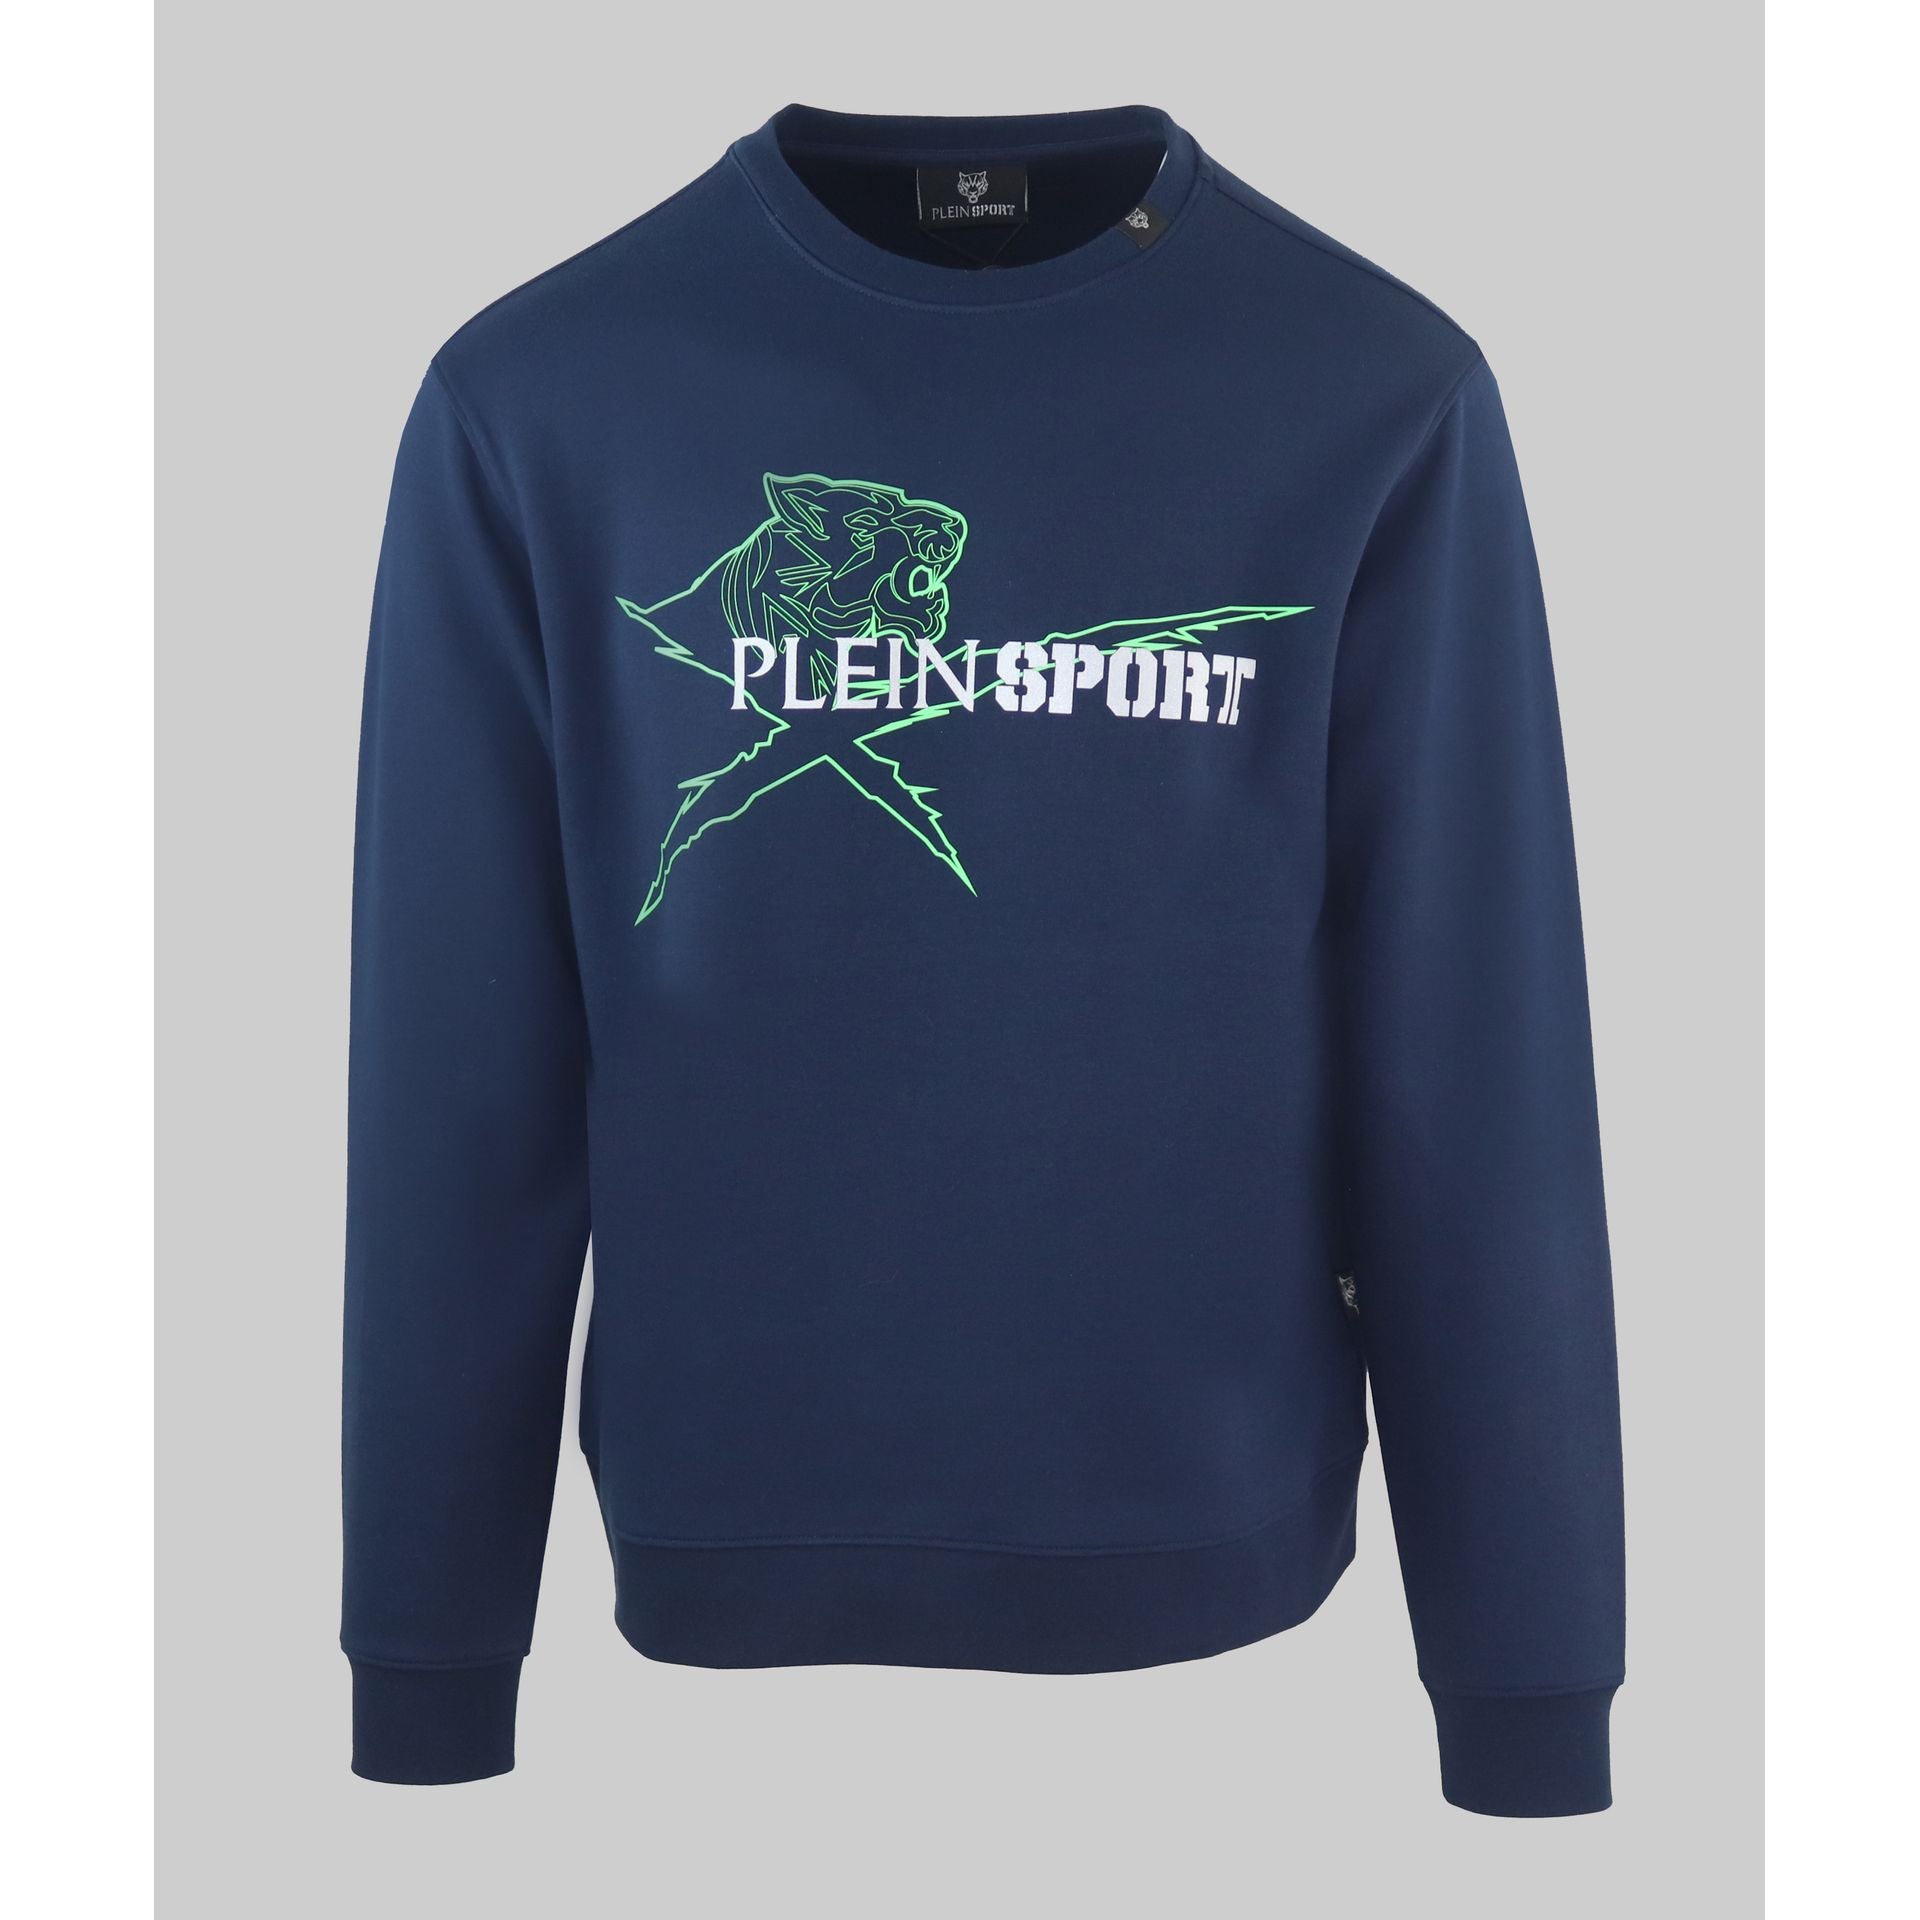 Plein Sport Sweatshirts - TheNumber1Shop.com